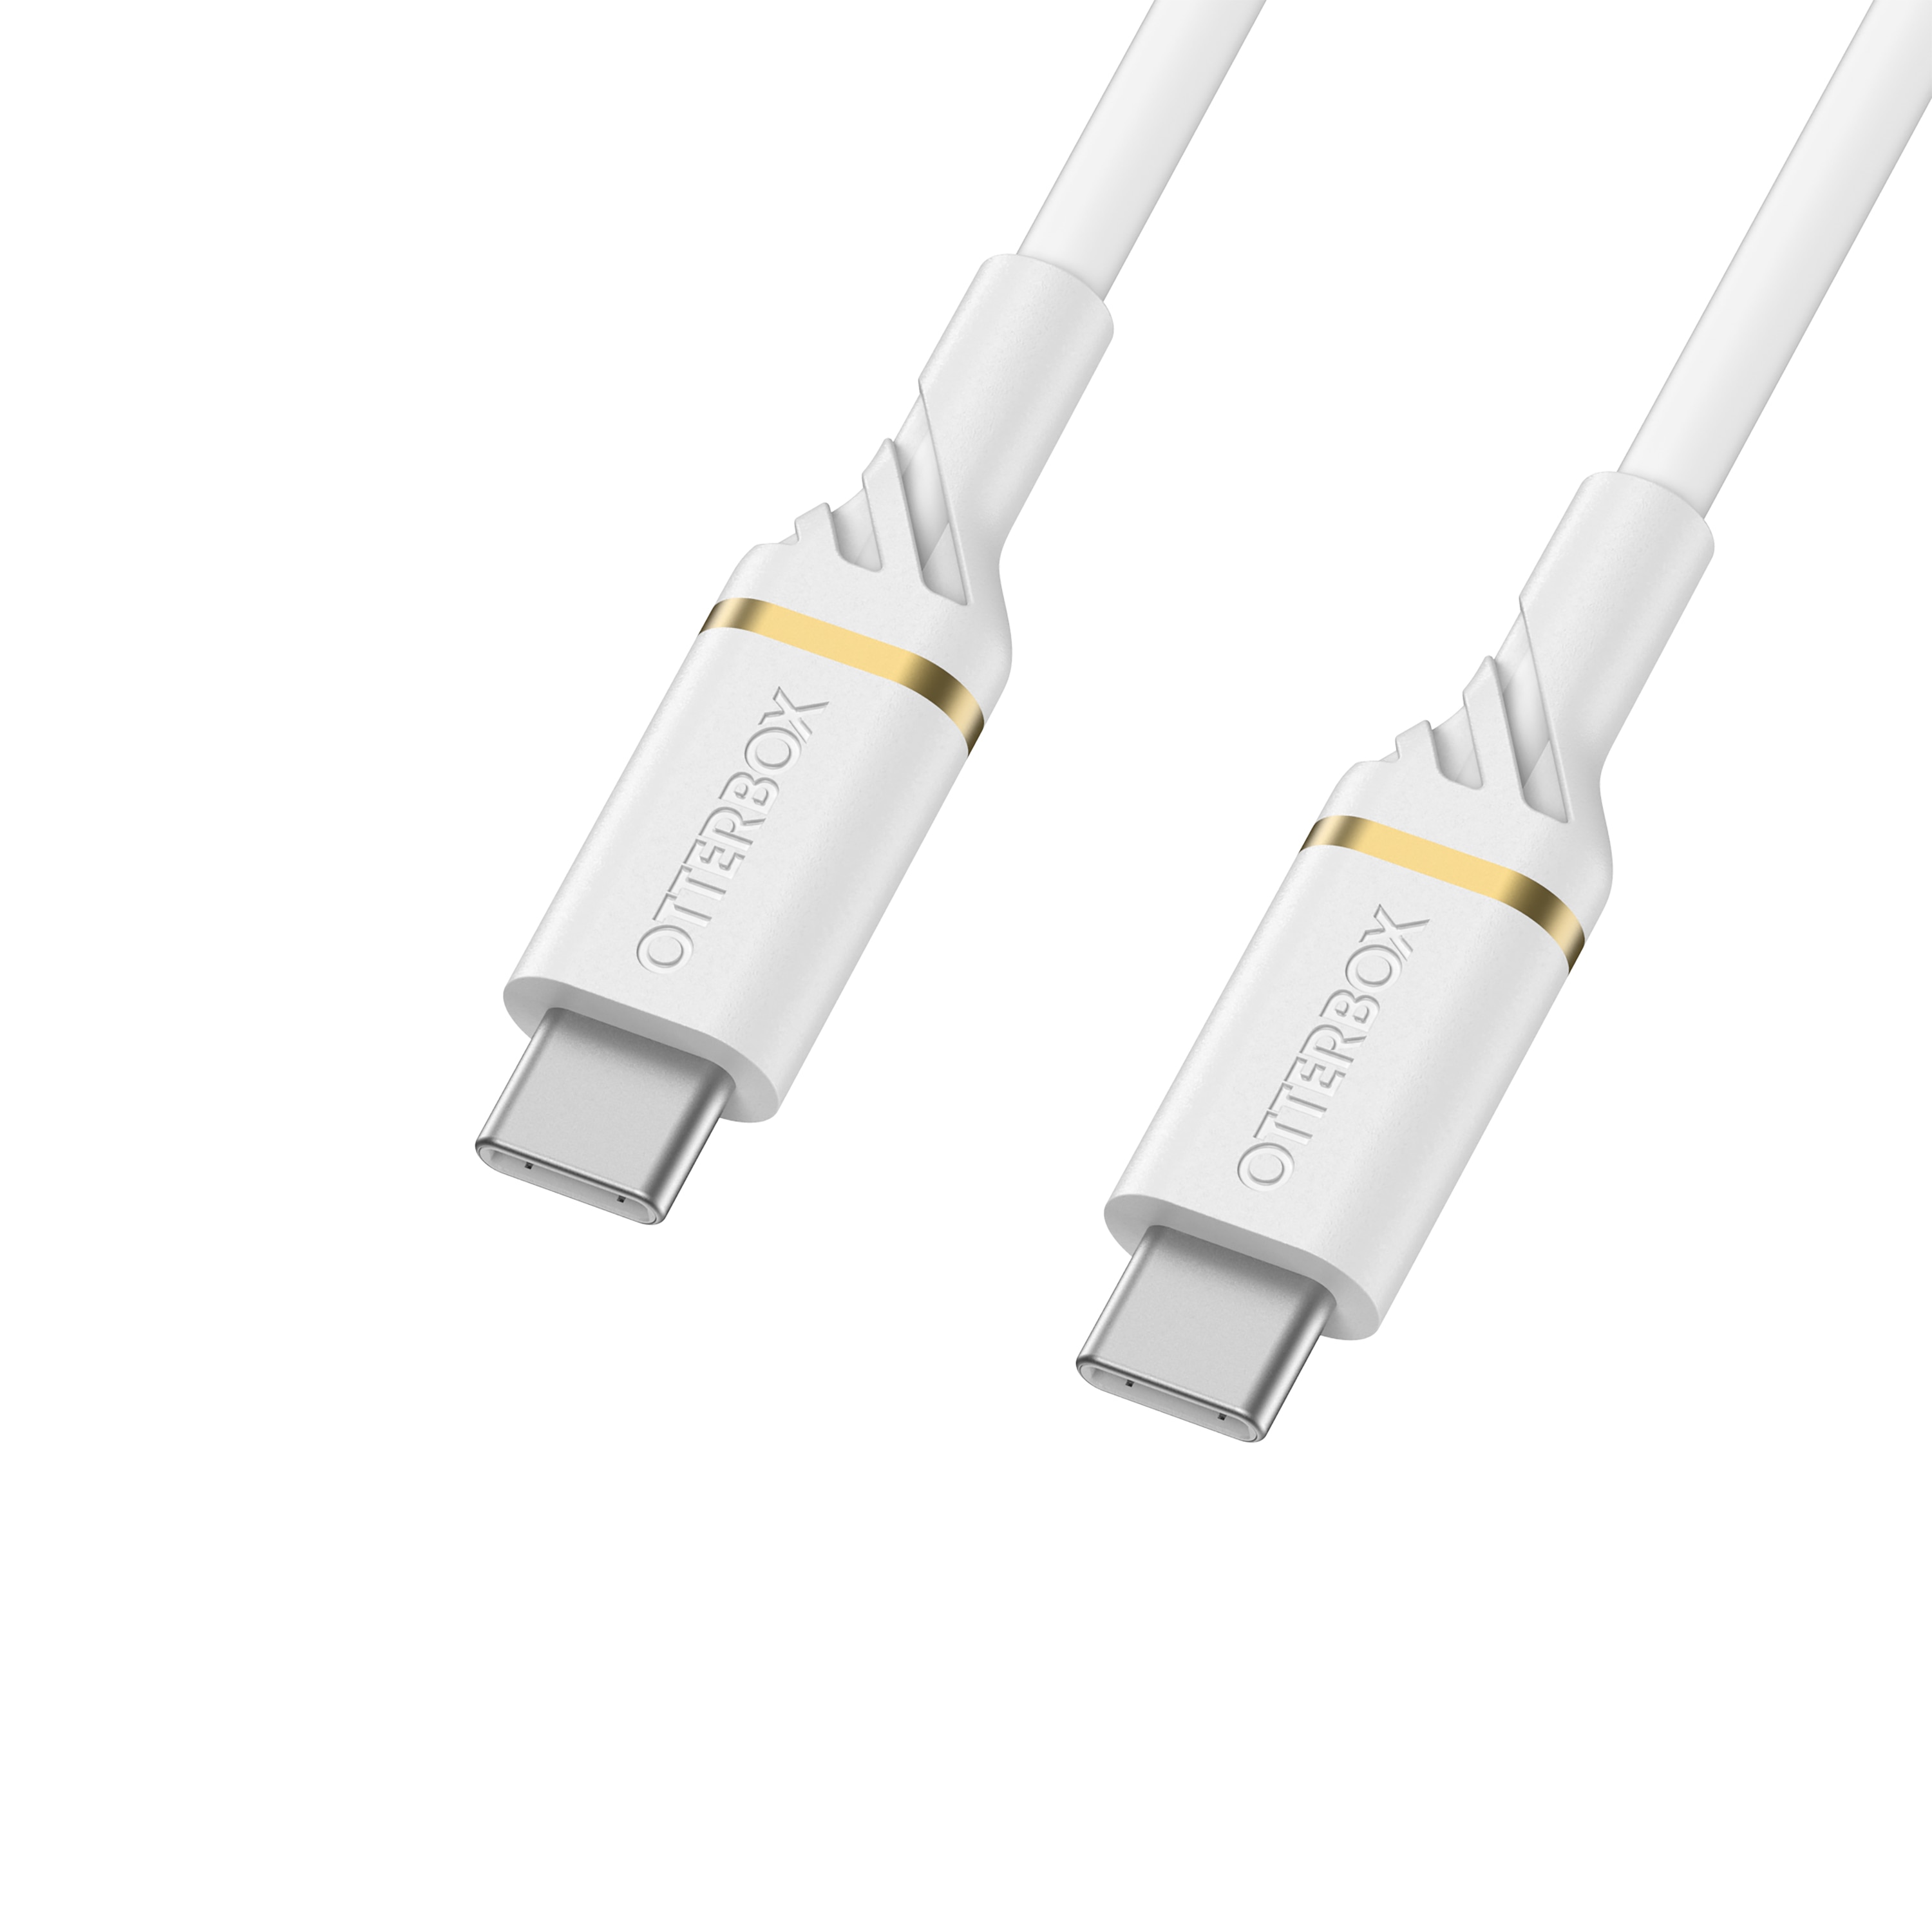 USB-C -> USB-C Laddkabel 1m Fast Charge vit